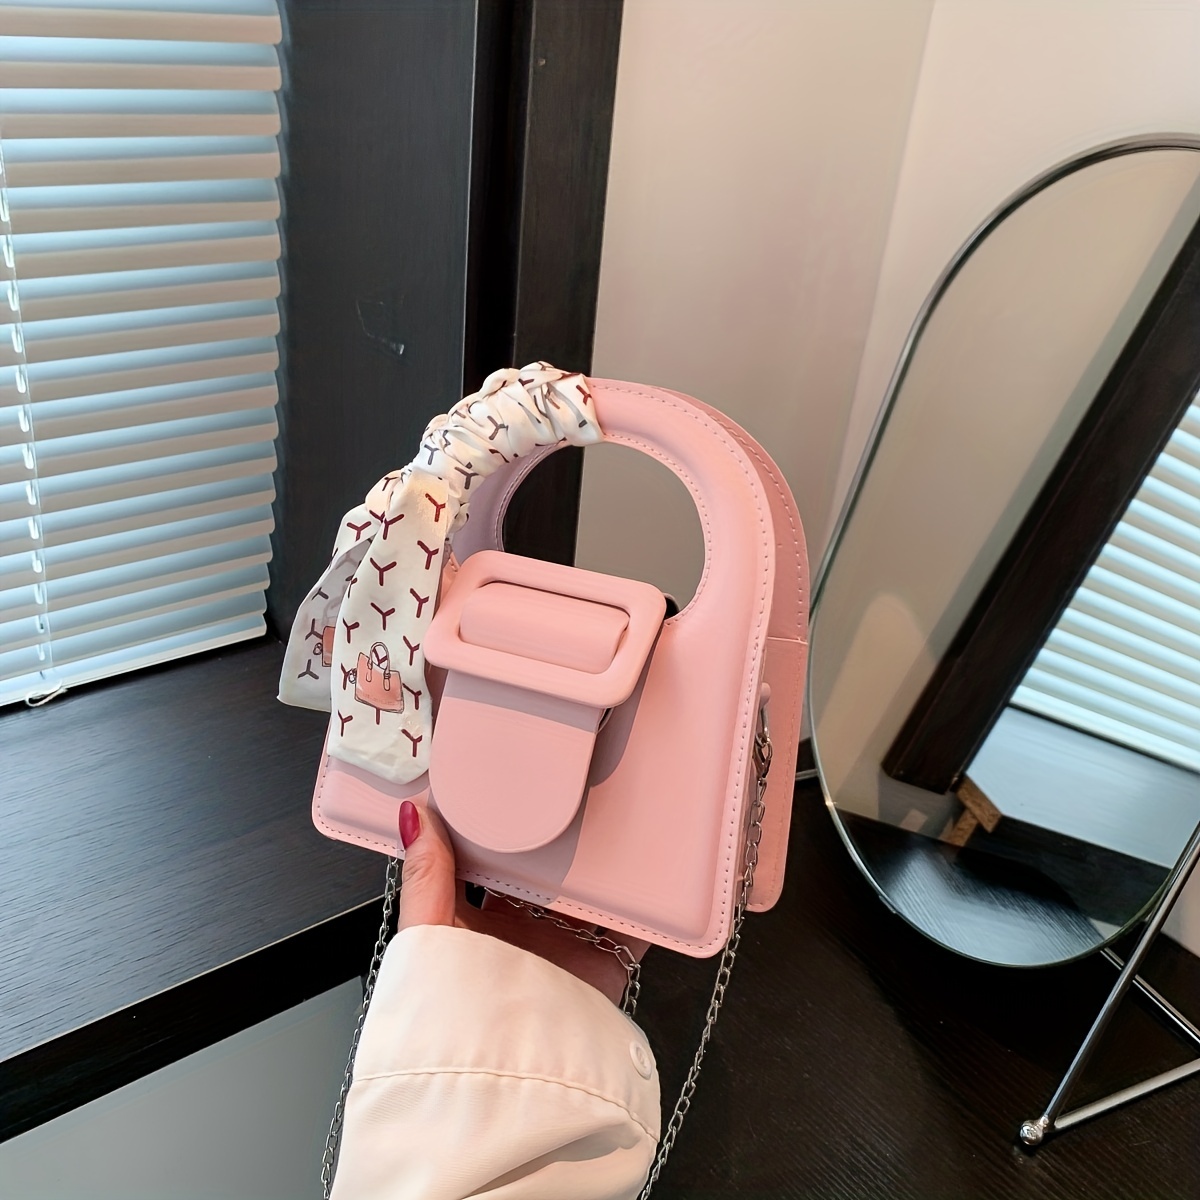 Boyy Bobby 18 Leather Handbag in Pink